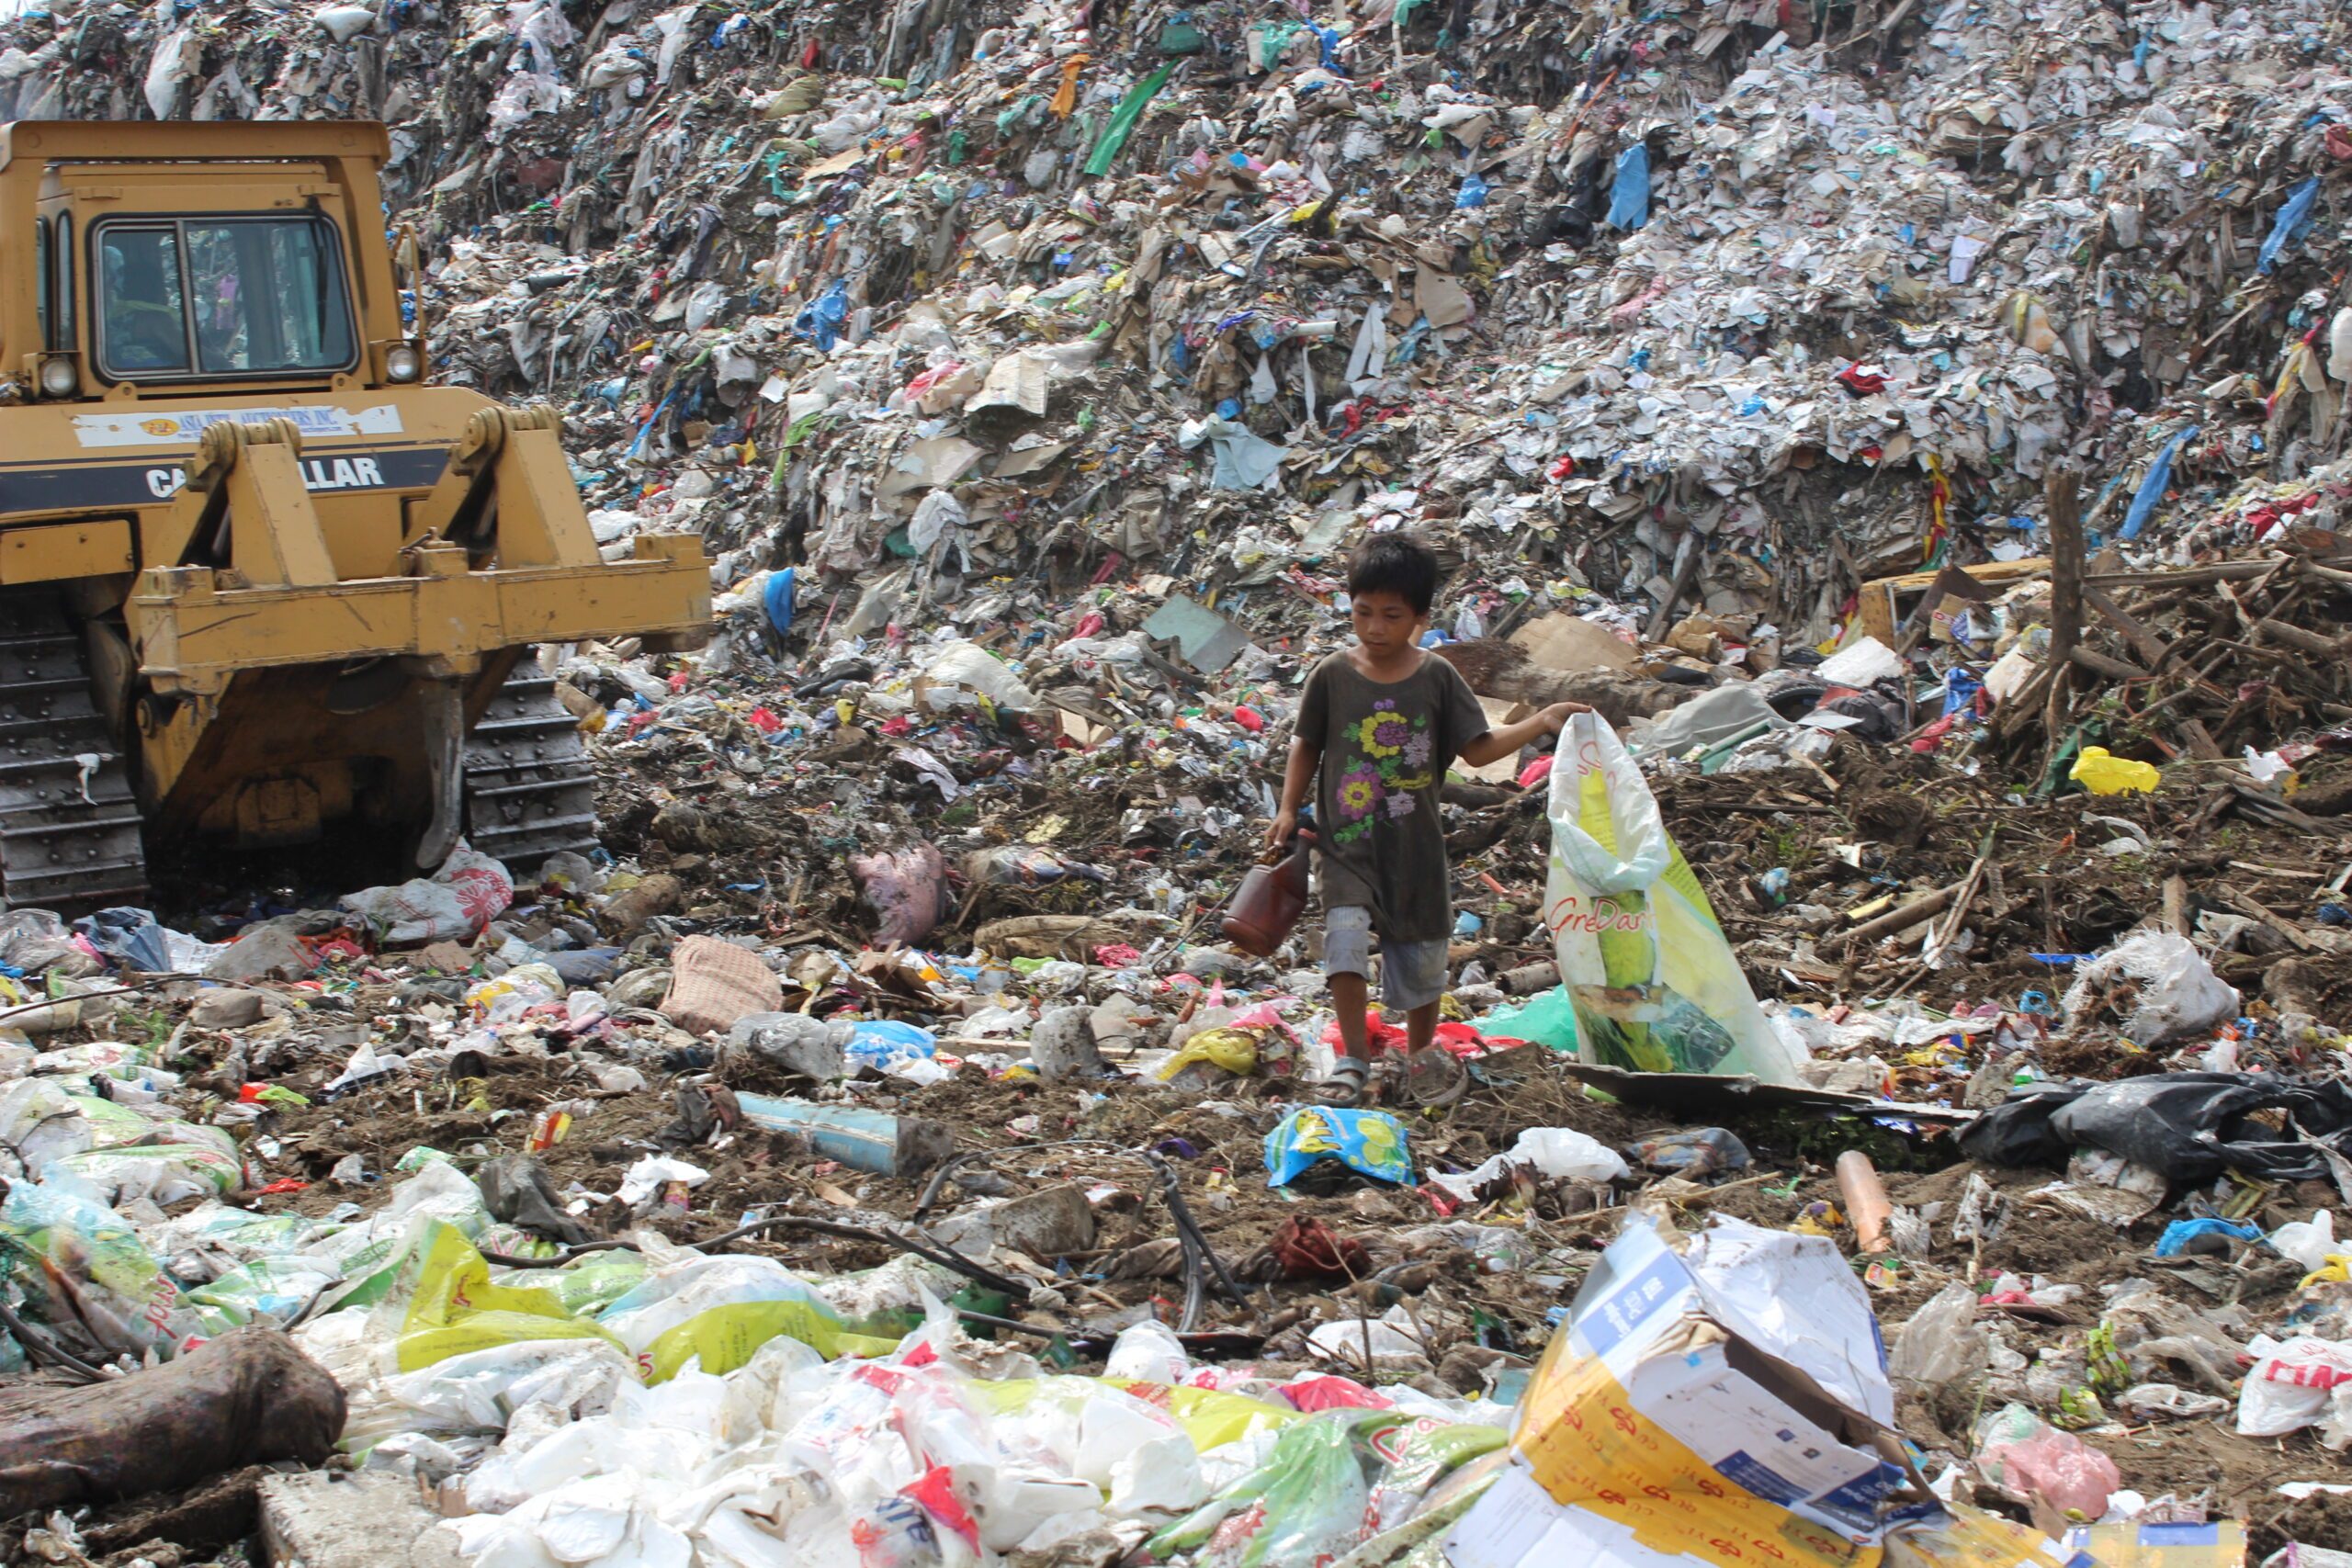 Eastern Visayas office face complaints over open dumpsites